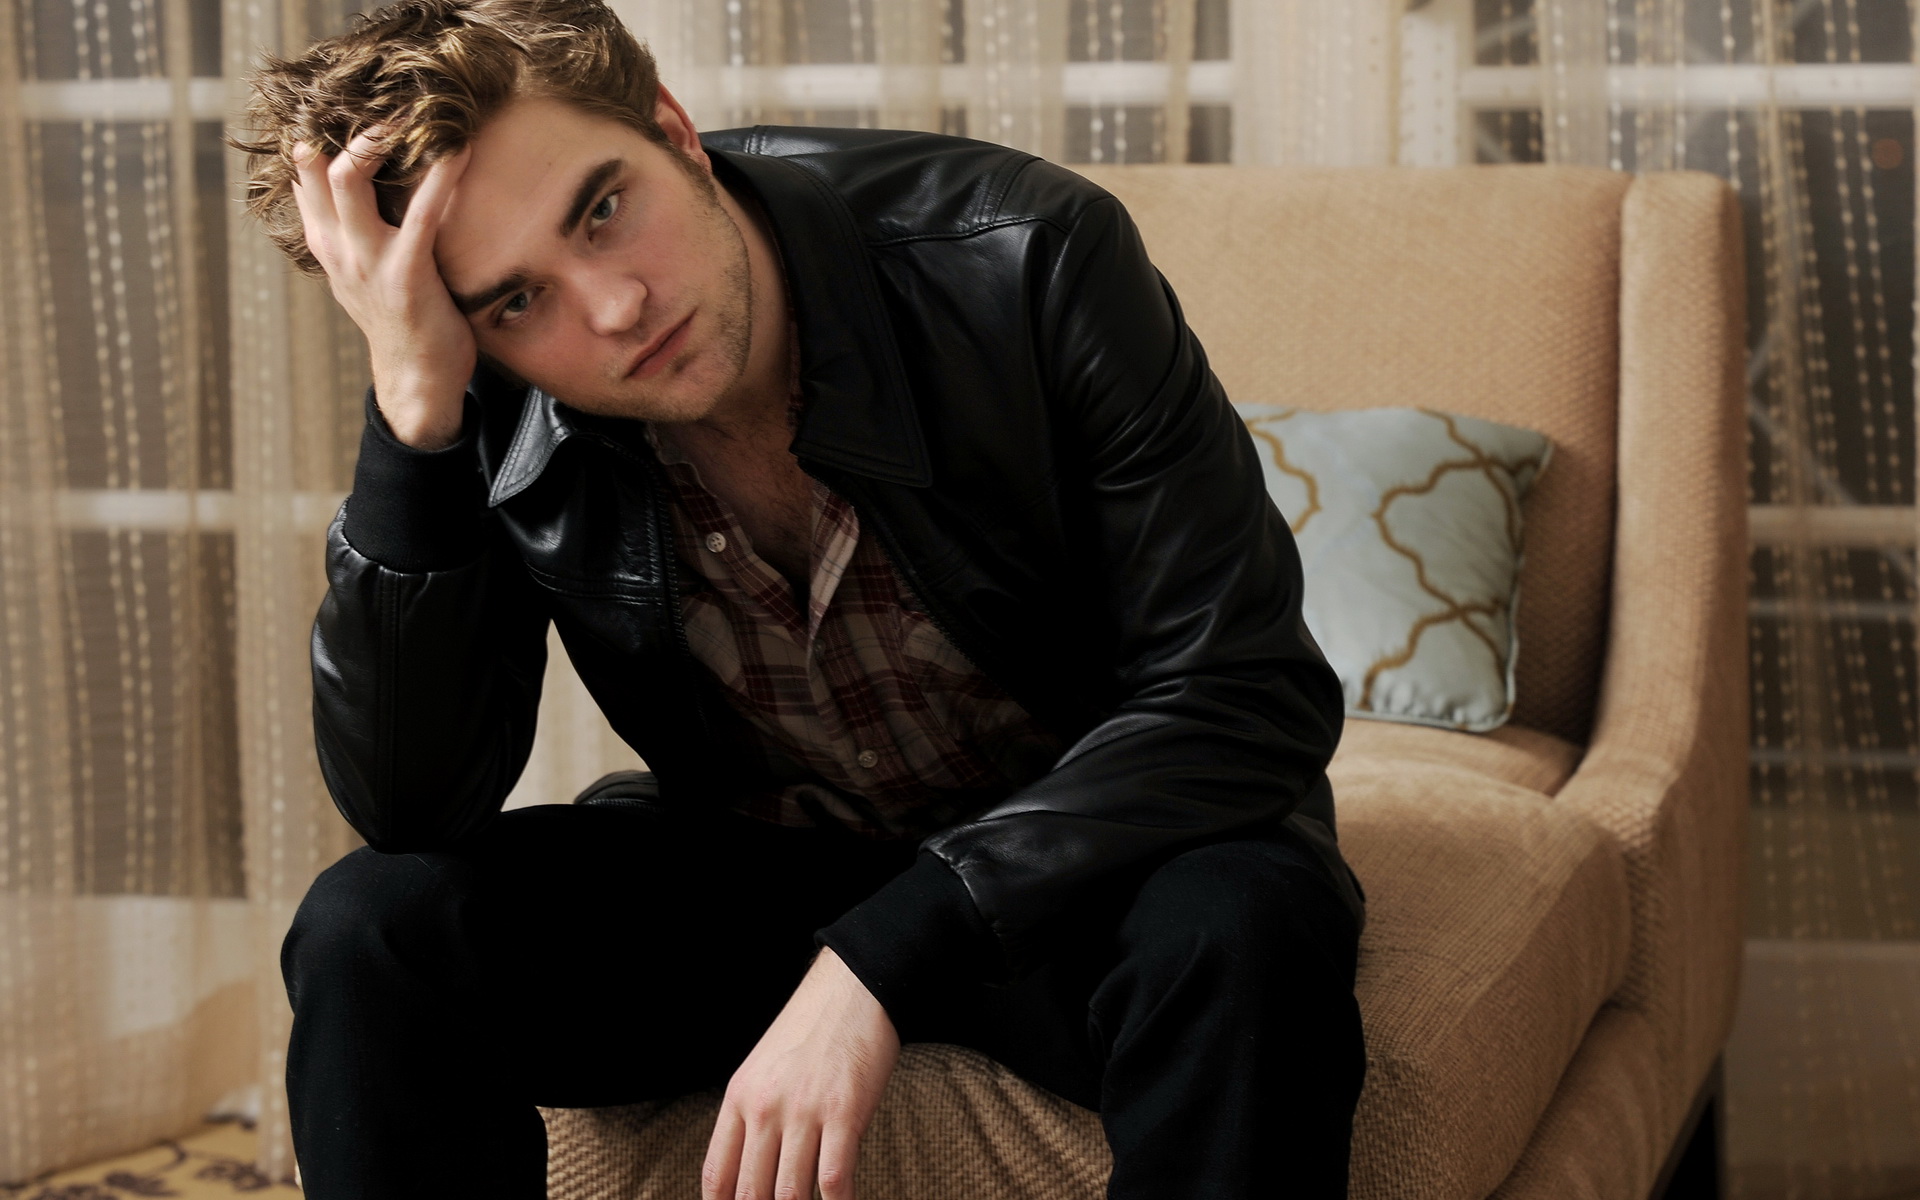 Robert Pattinson Poses For A Portrait